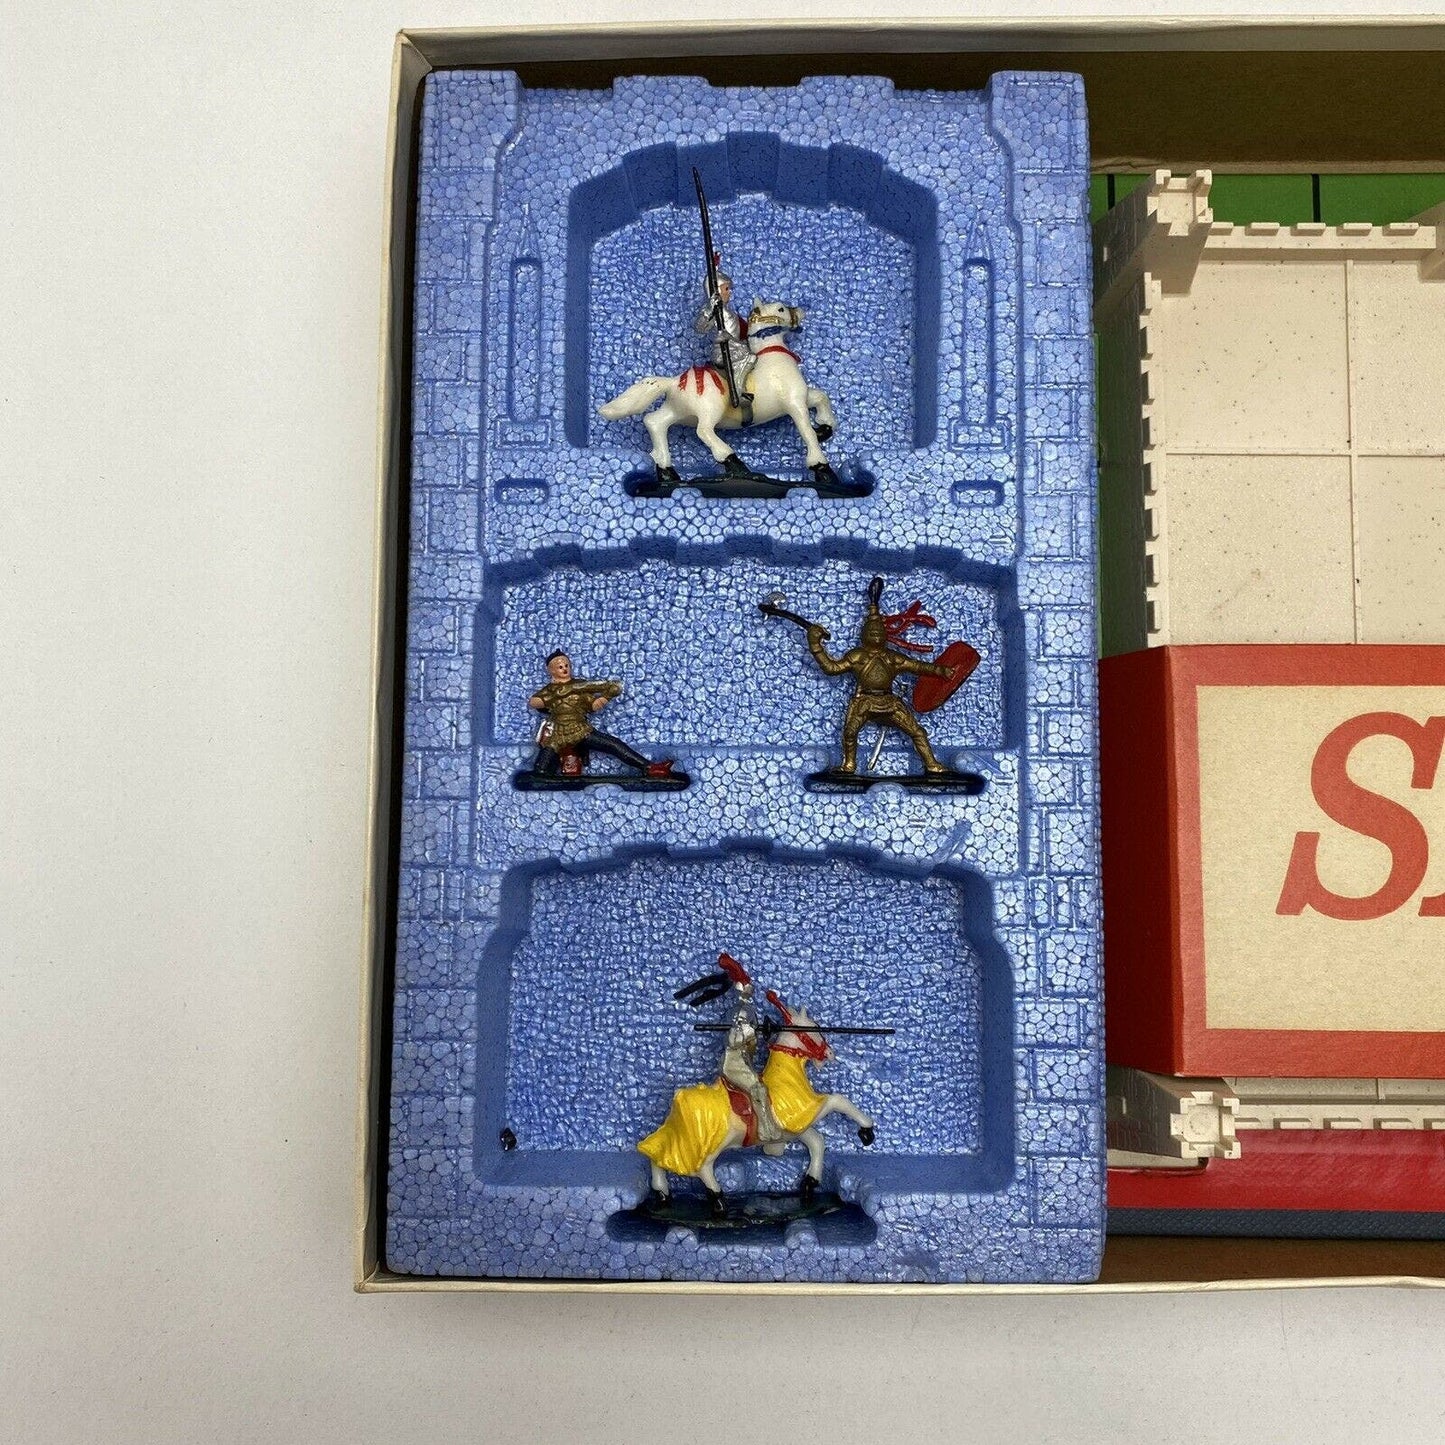 Siege Board Game Vintage 1966 Strategy Knights in Shining Armor Milton Bradley